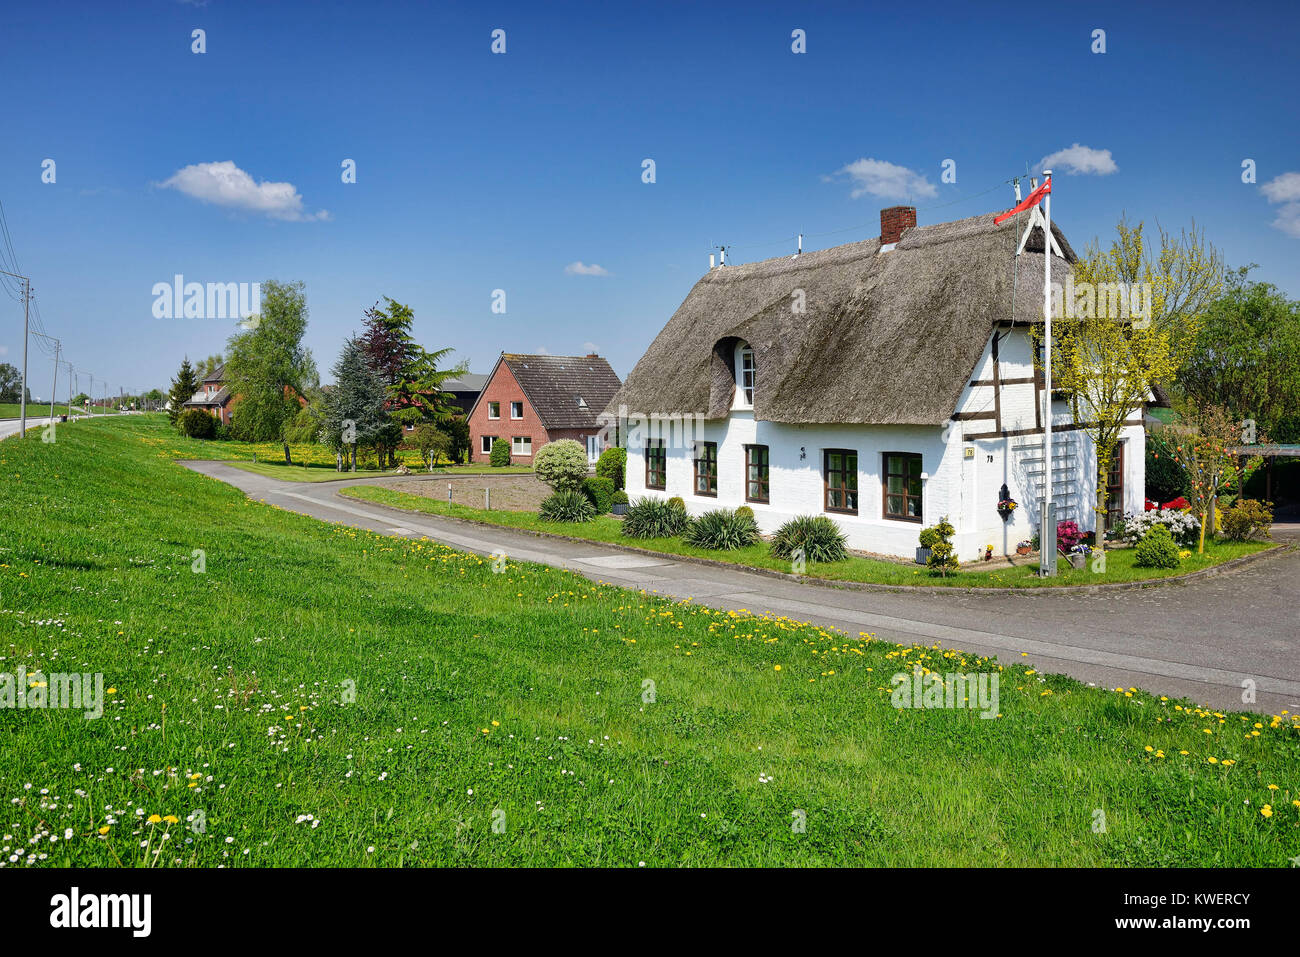 Houses in the Spadenlaender main dyke, 4 and marshy land, Hamburg, Germany, Europe, Haeuser am Spadenlaender Hauptdeich, Vier- und Marschlande, Deutsc Stock Photo